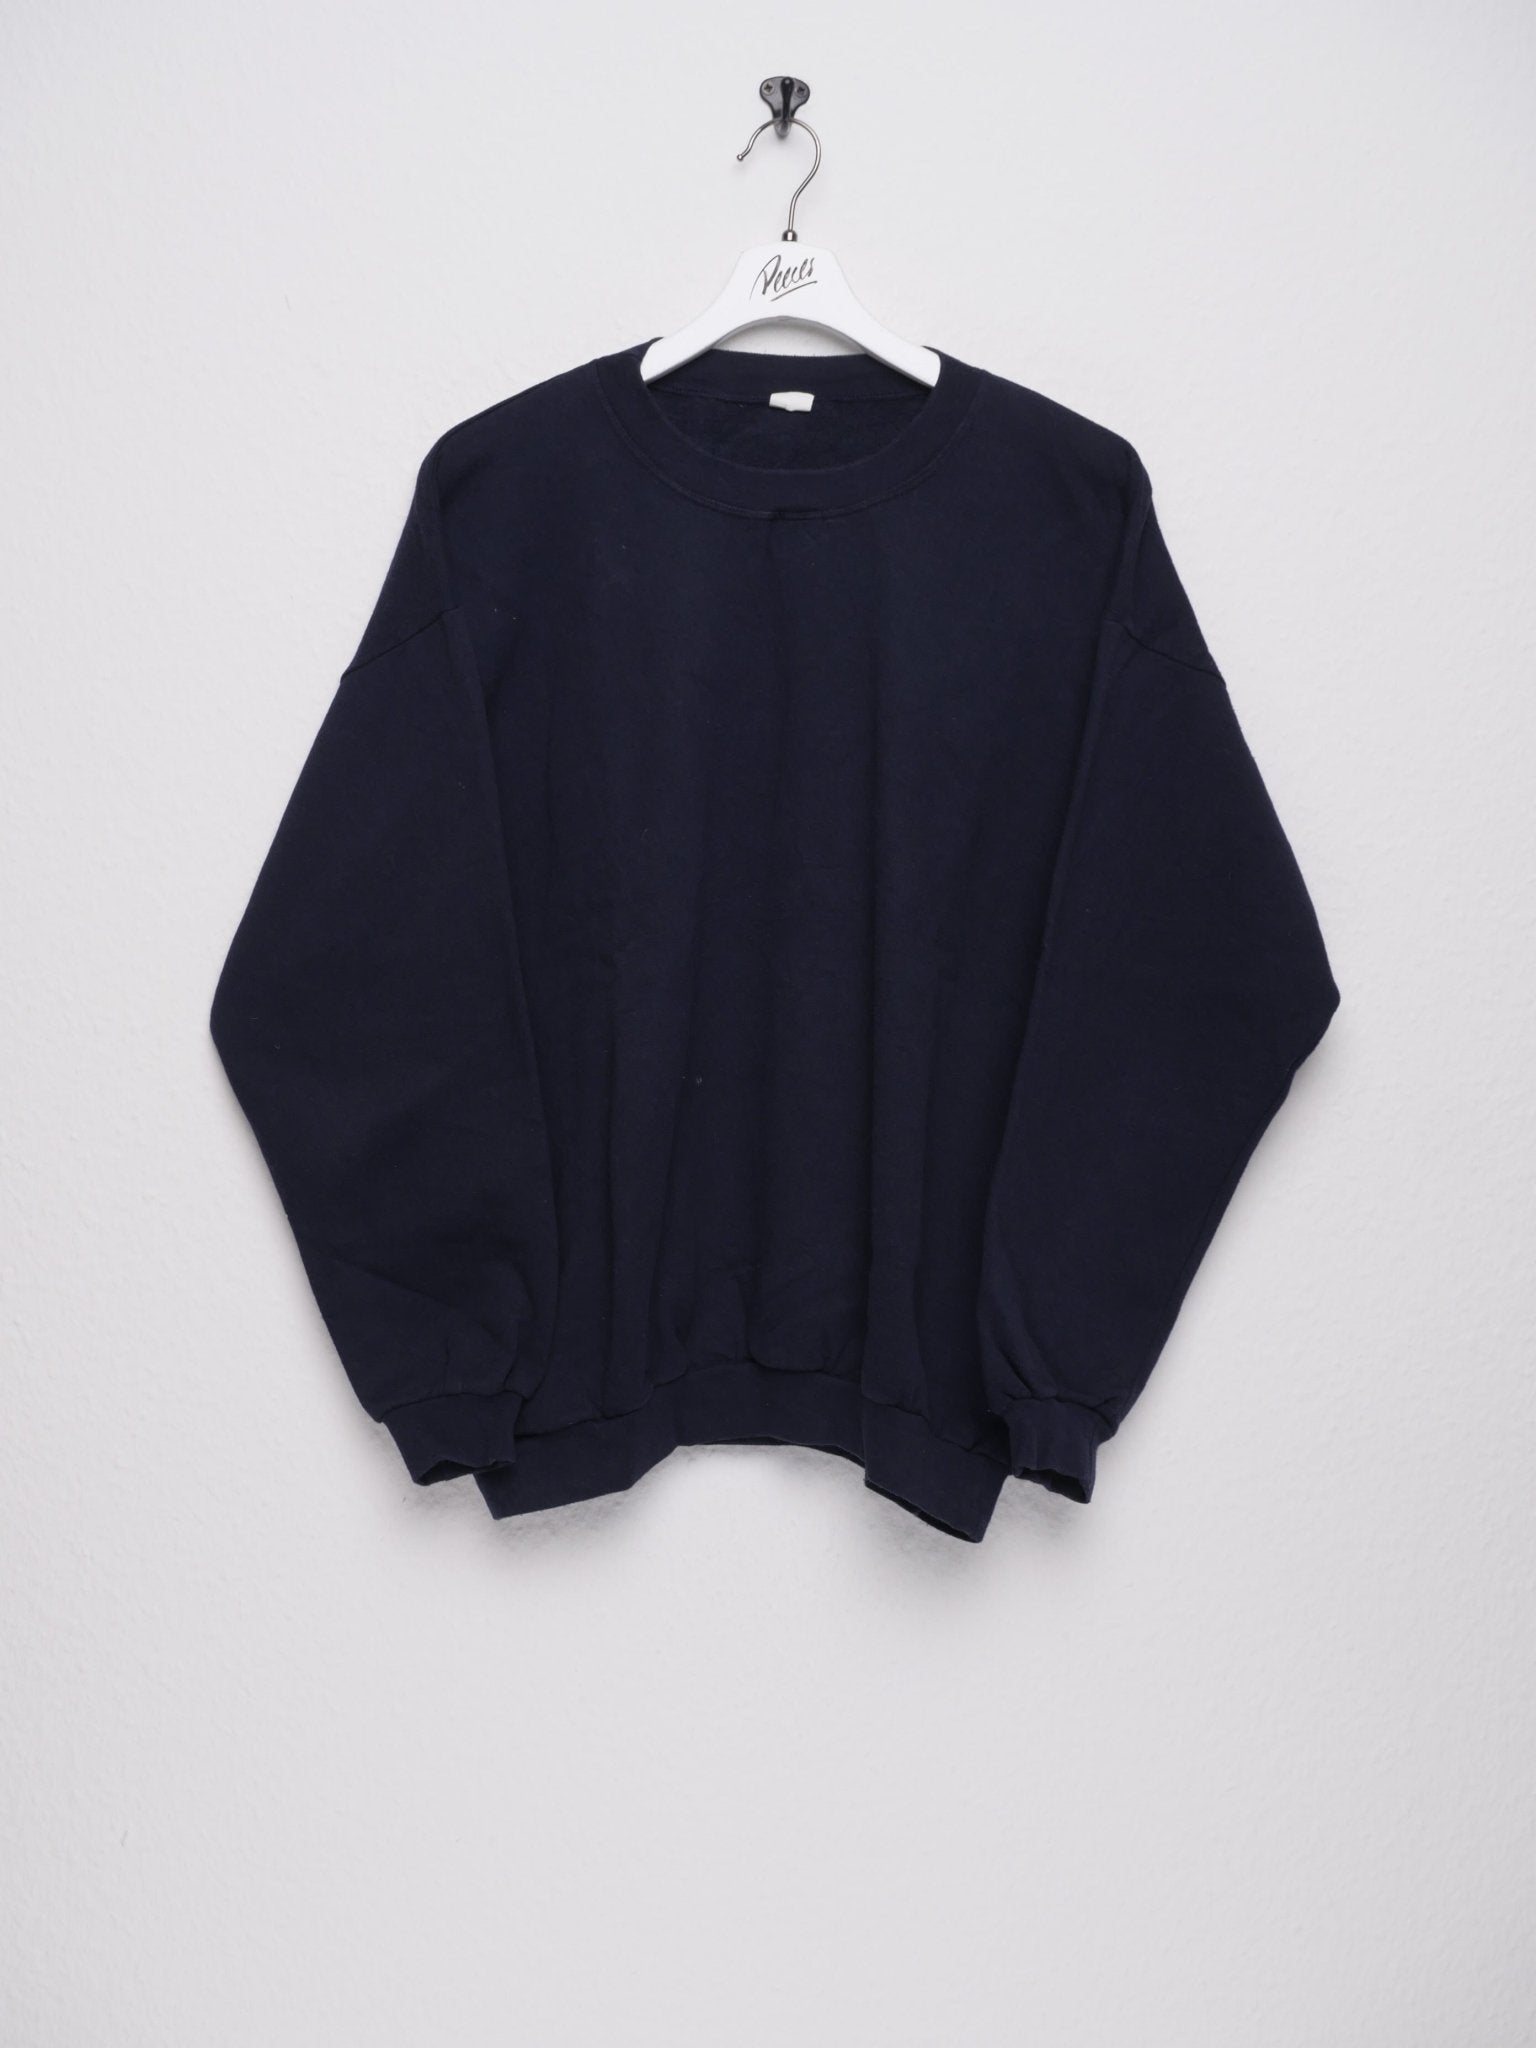 Basic navy Sweater - Peeces